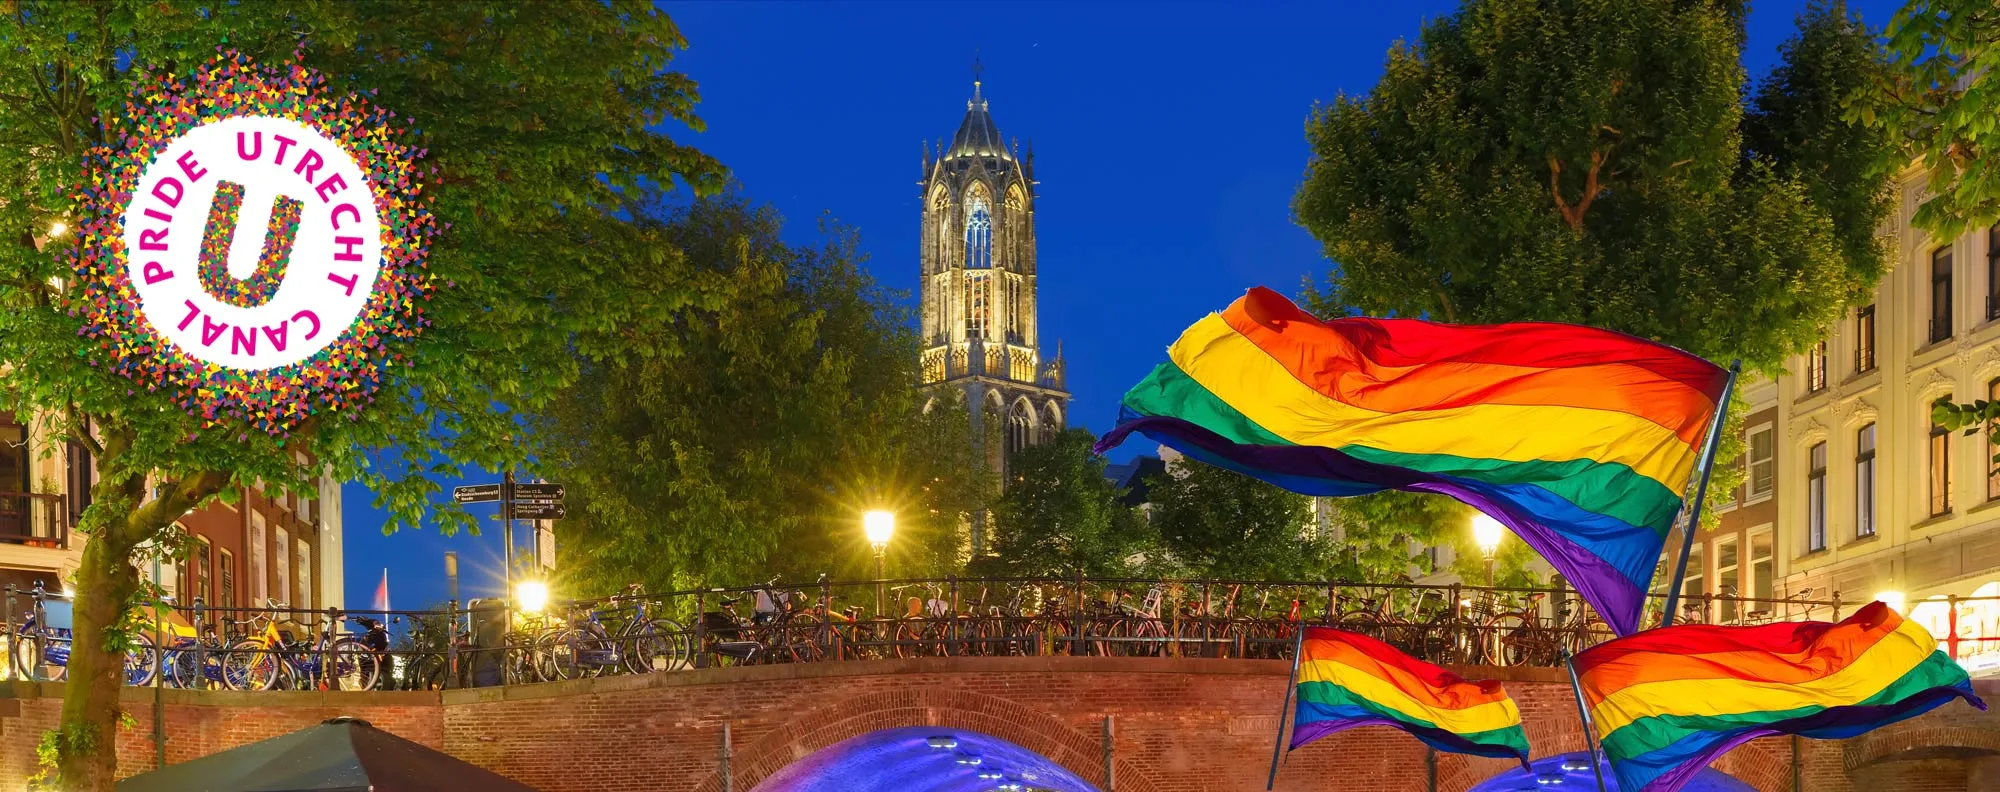 First Utrecht Canal Gay Pride 2017 The Netherlands | Coupleofmen.com